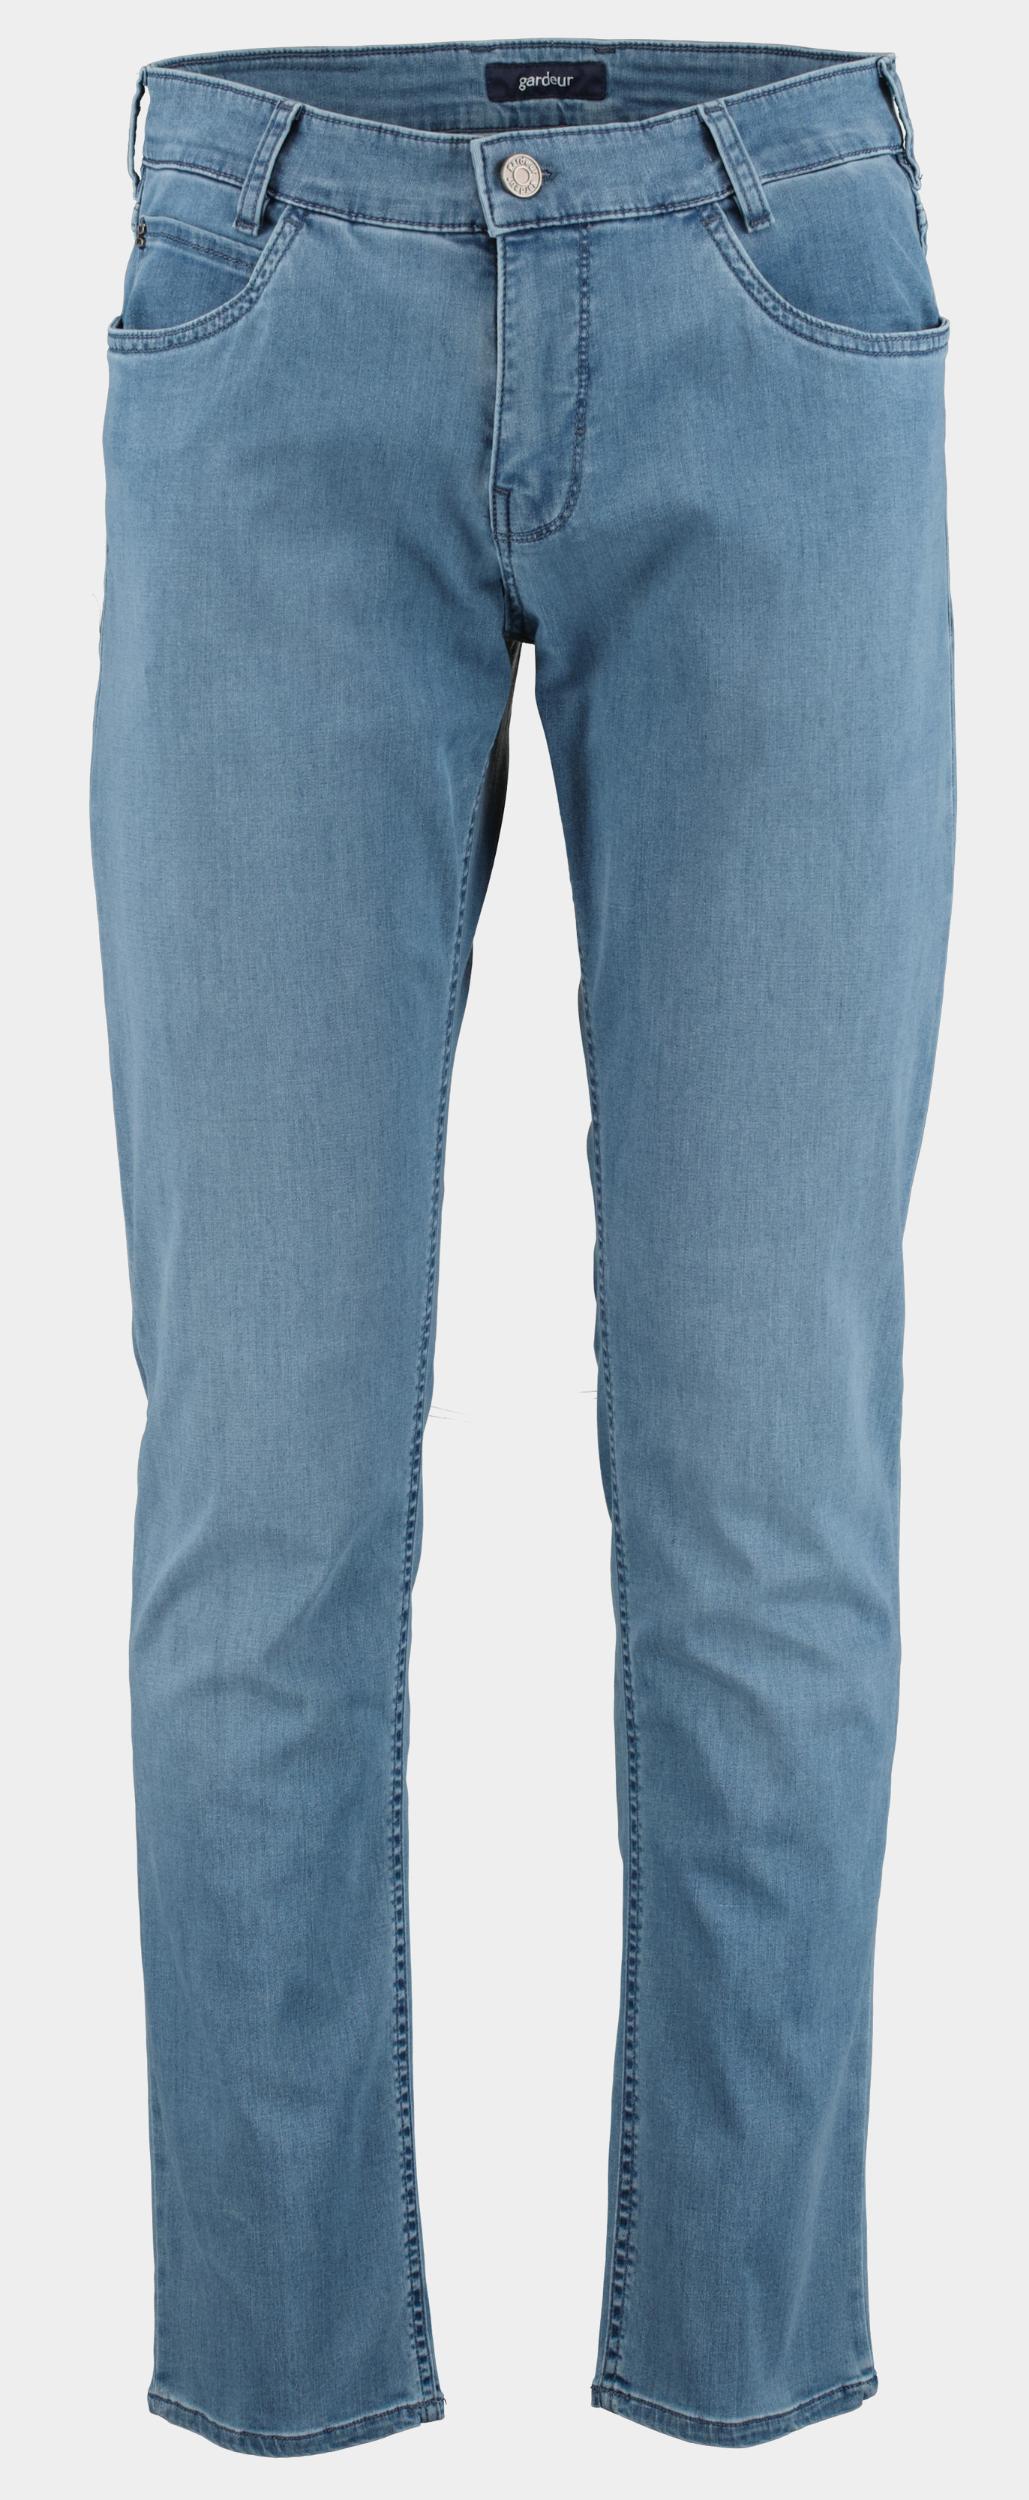 Gardeur 5-Pocket Jeans Blauw Hose 5-Pocket Slim Fit SANDRO-2 471241/7265